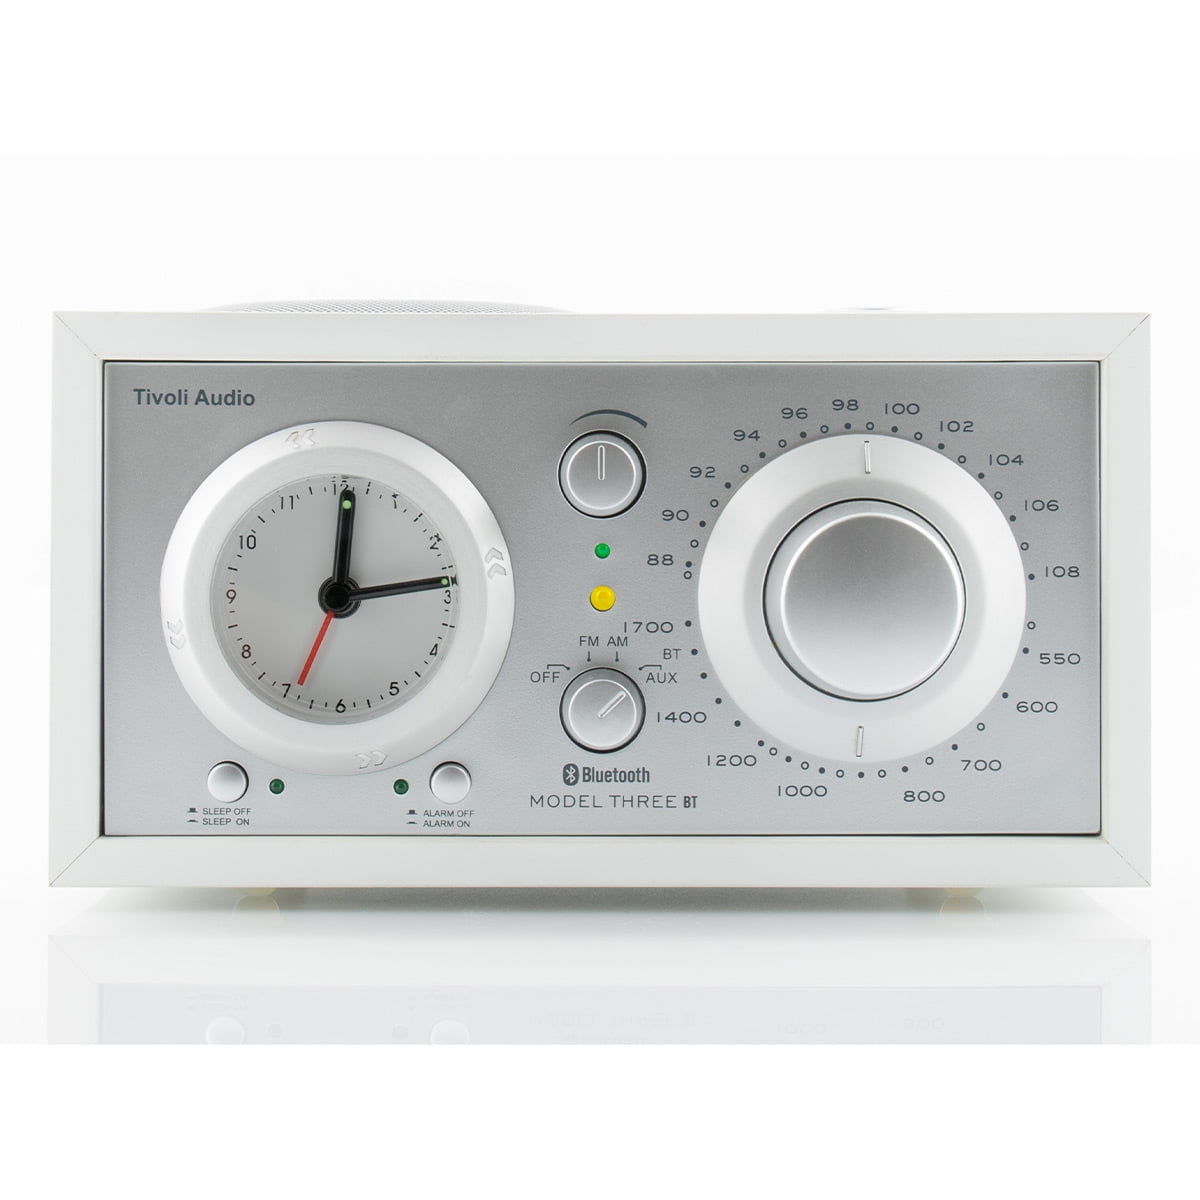 FM Scan Shower Radio, White w/Silver Tone, Clock w/Alarm, Wrist Strap,  #FM500